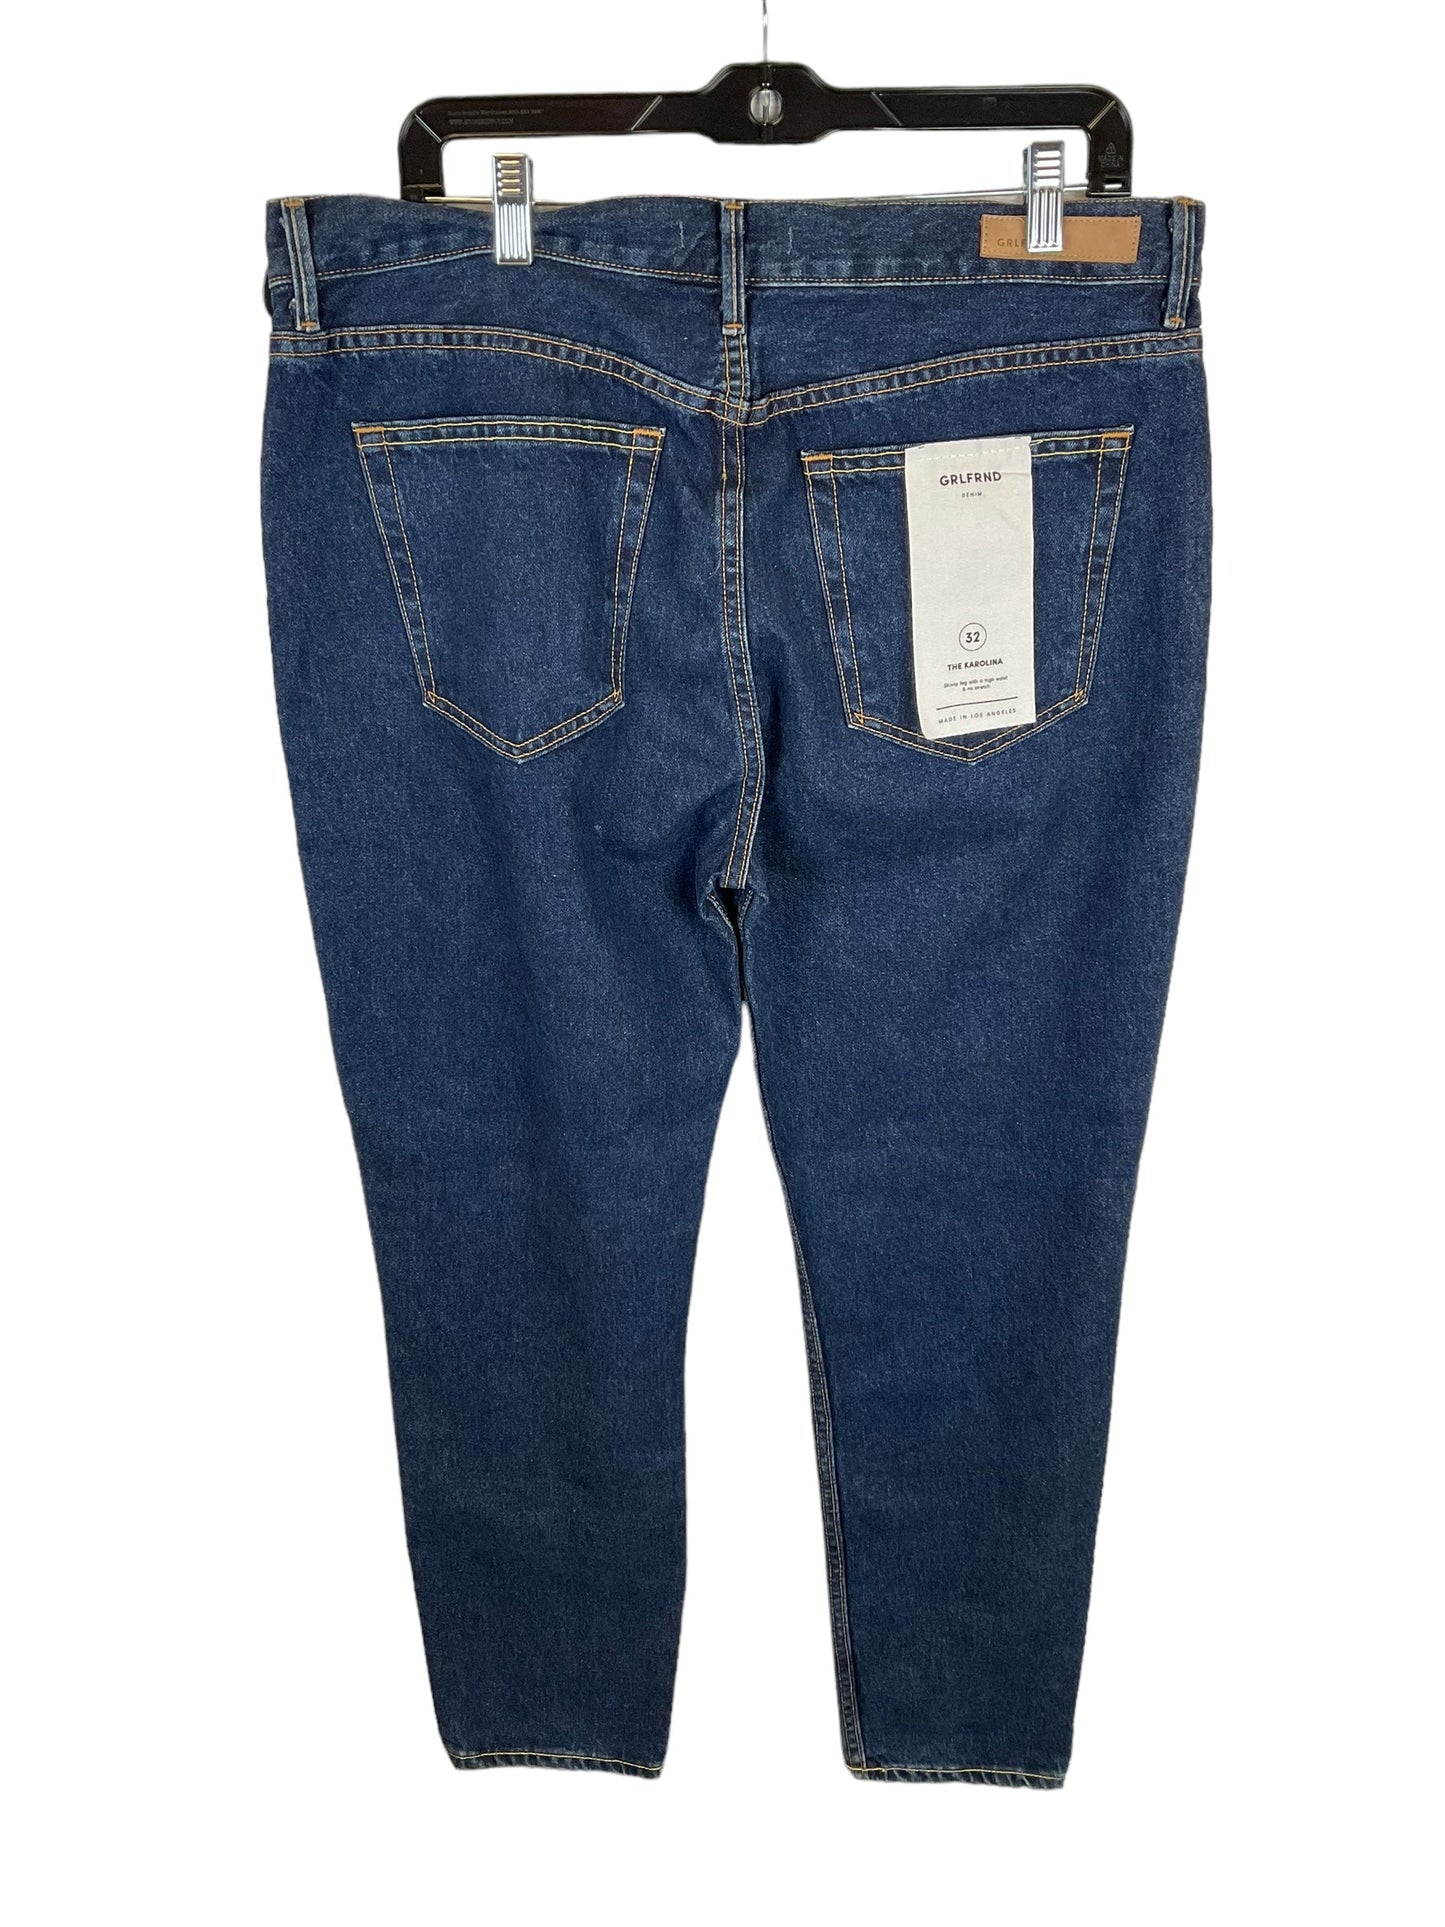 Blue Denim Jeans Designer Clothes Mentor, Size 12